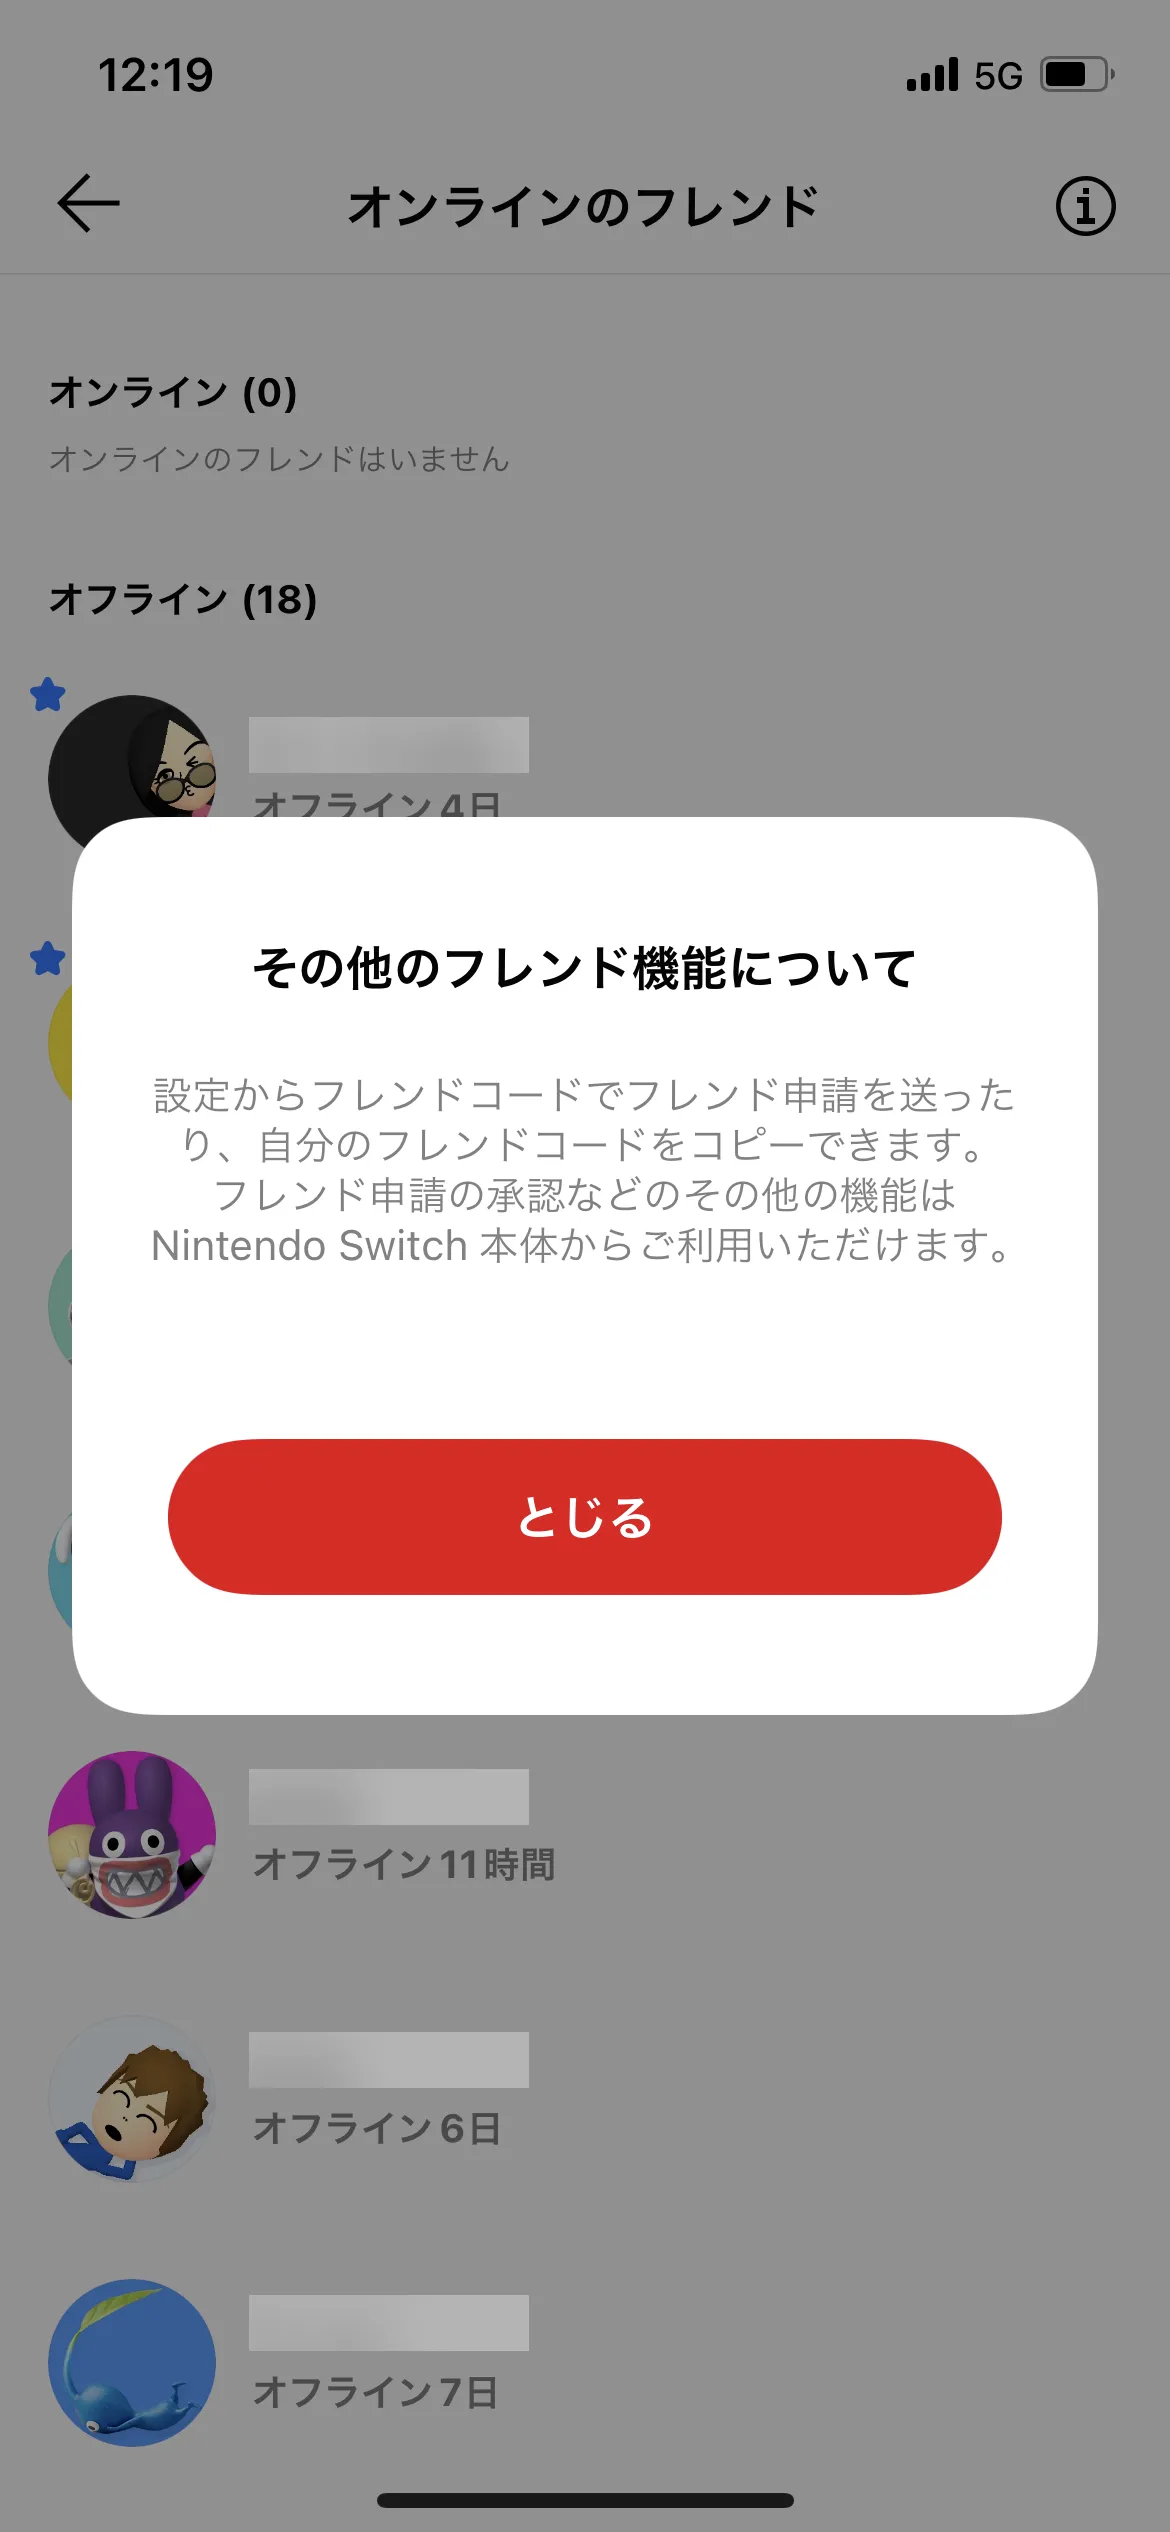 Nintendo Switch Online ホーム screen